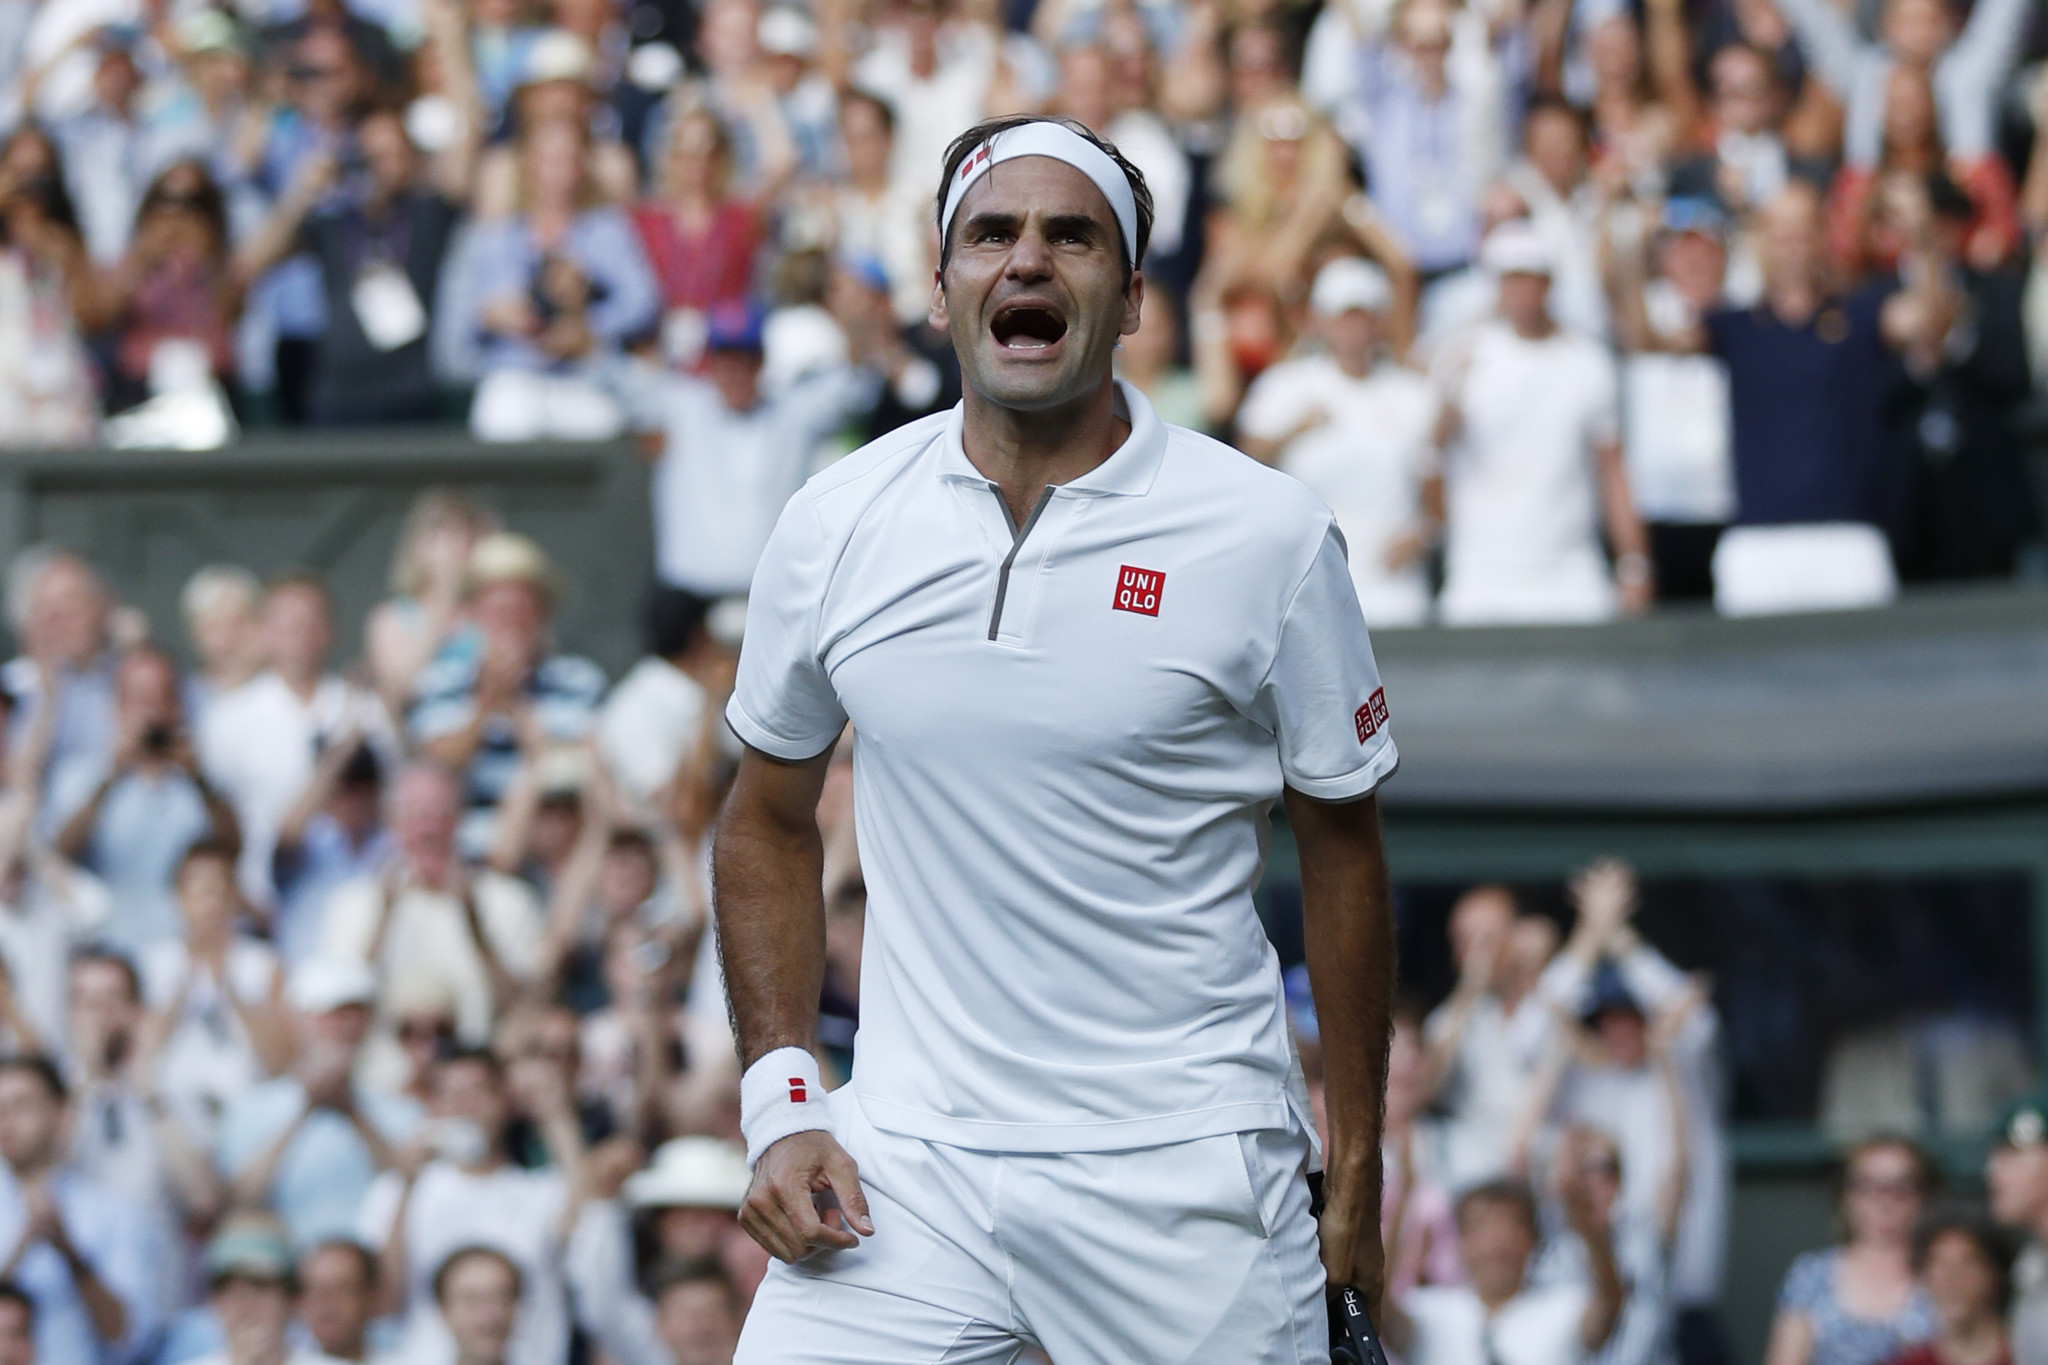 Roger Federer will face Novak Djokovic in the Wimbledon final ©Getty Images